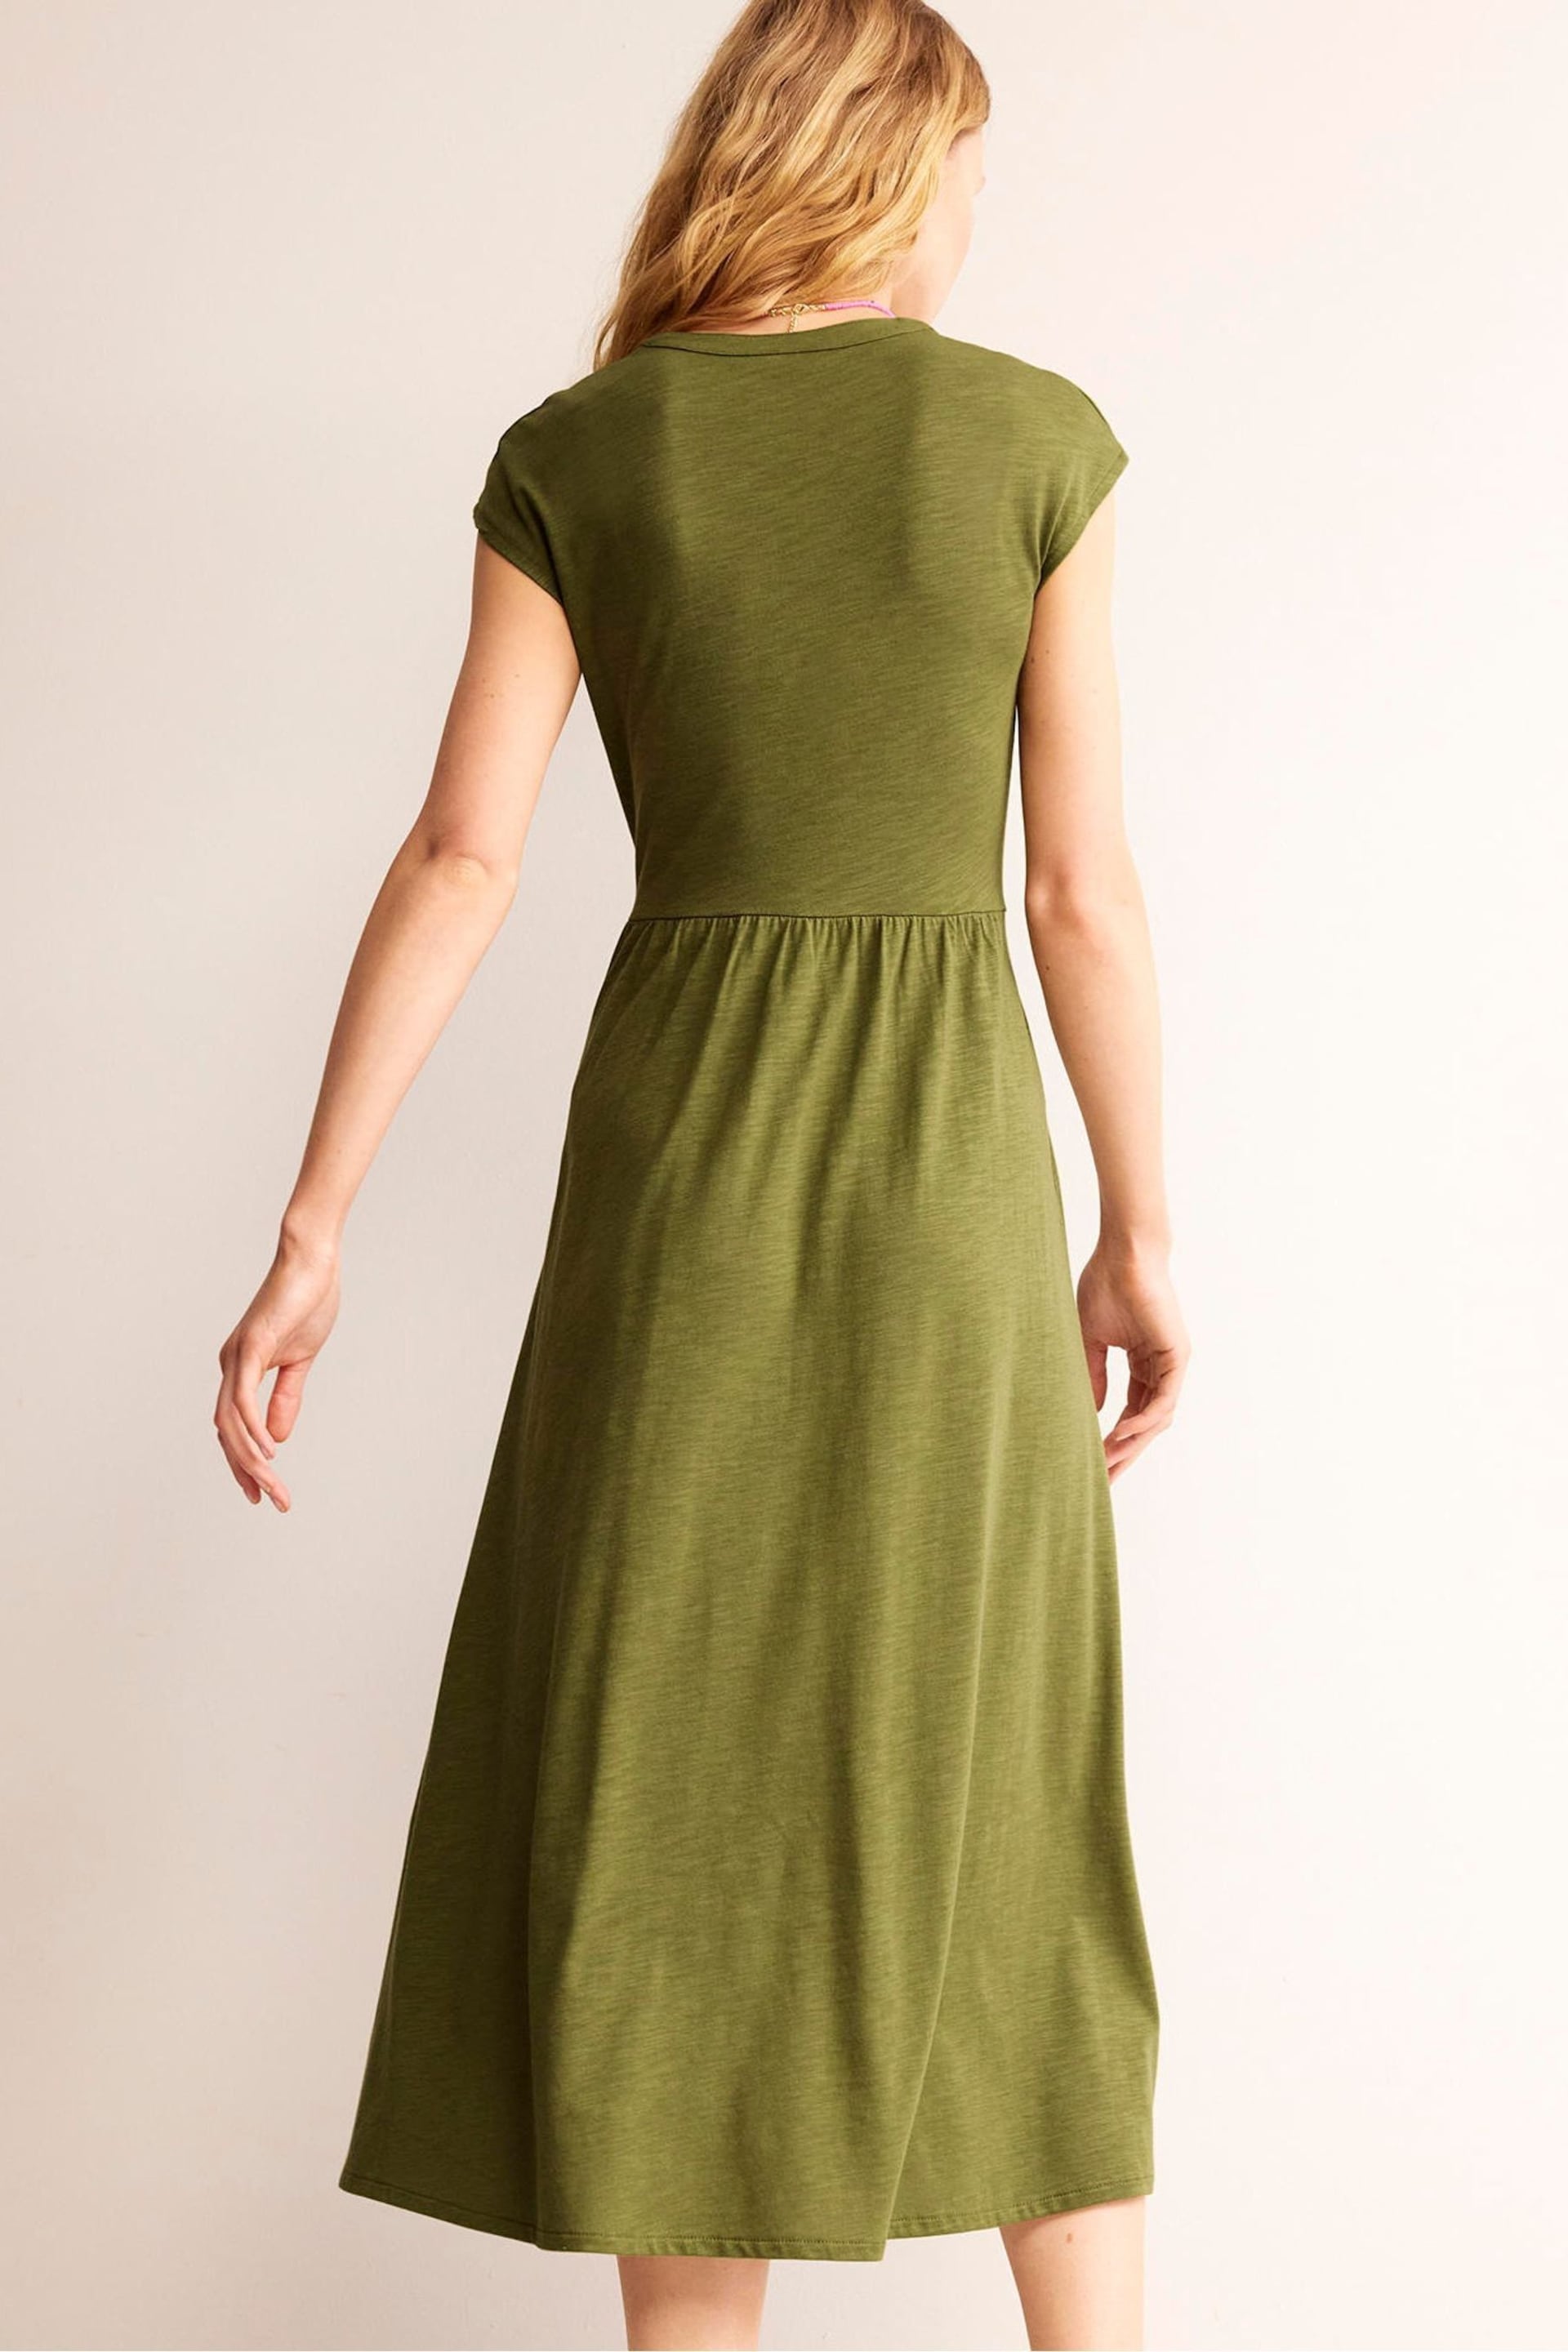 Boden Green Chloe Notch Jersey Midi Dress - Image 3 of 6